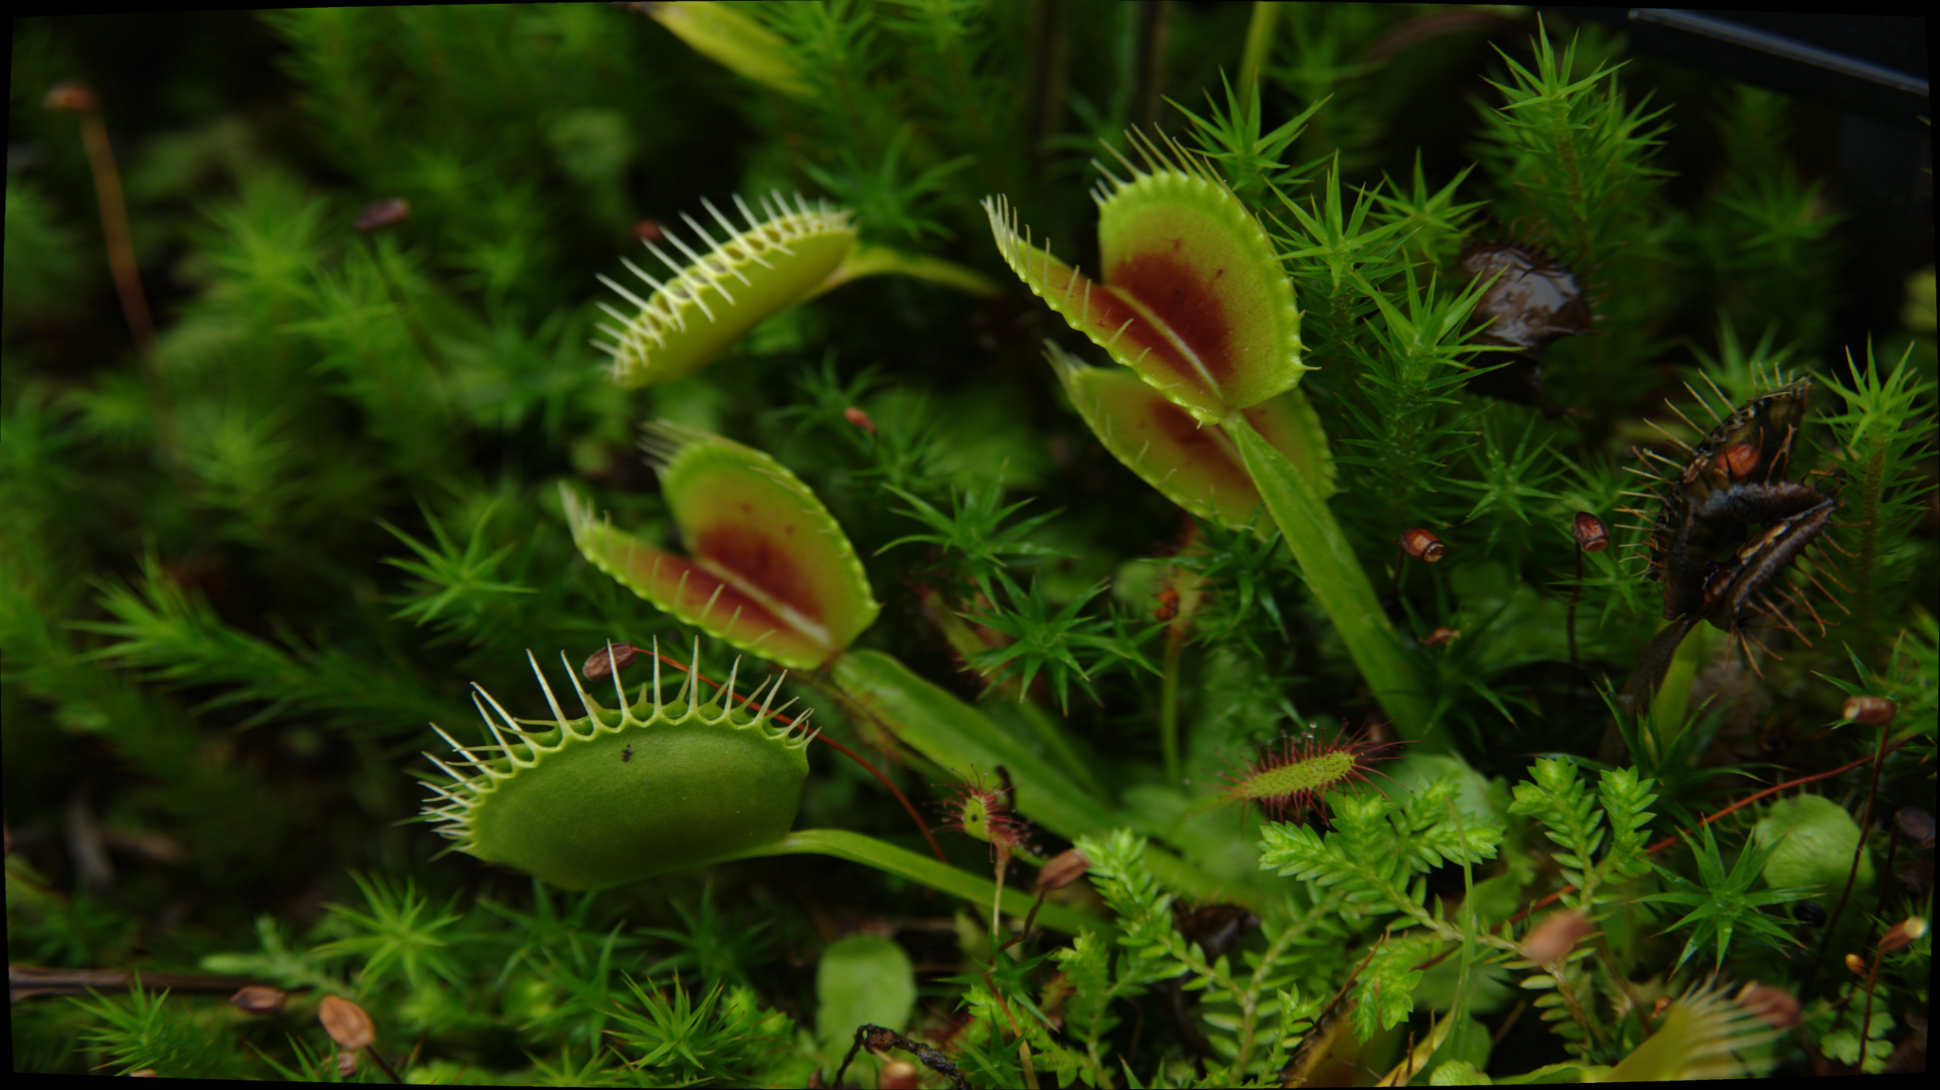 Several green venus flytrap leaves with red internal leaves